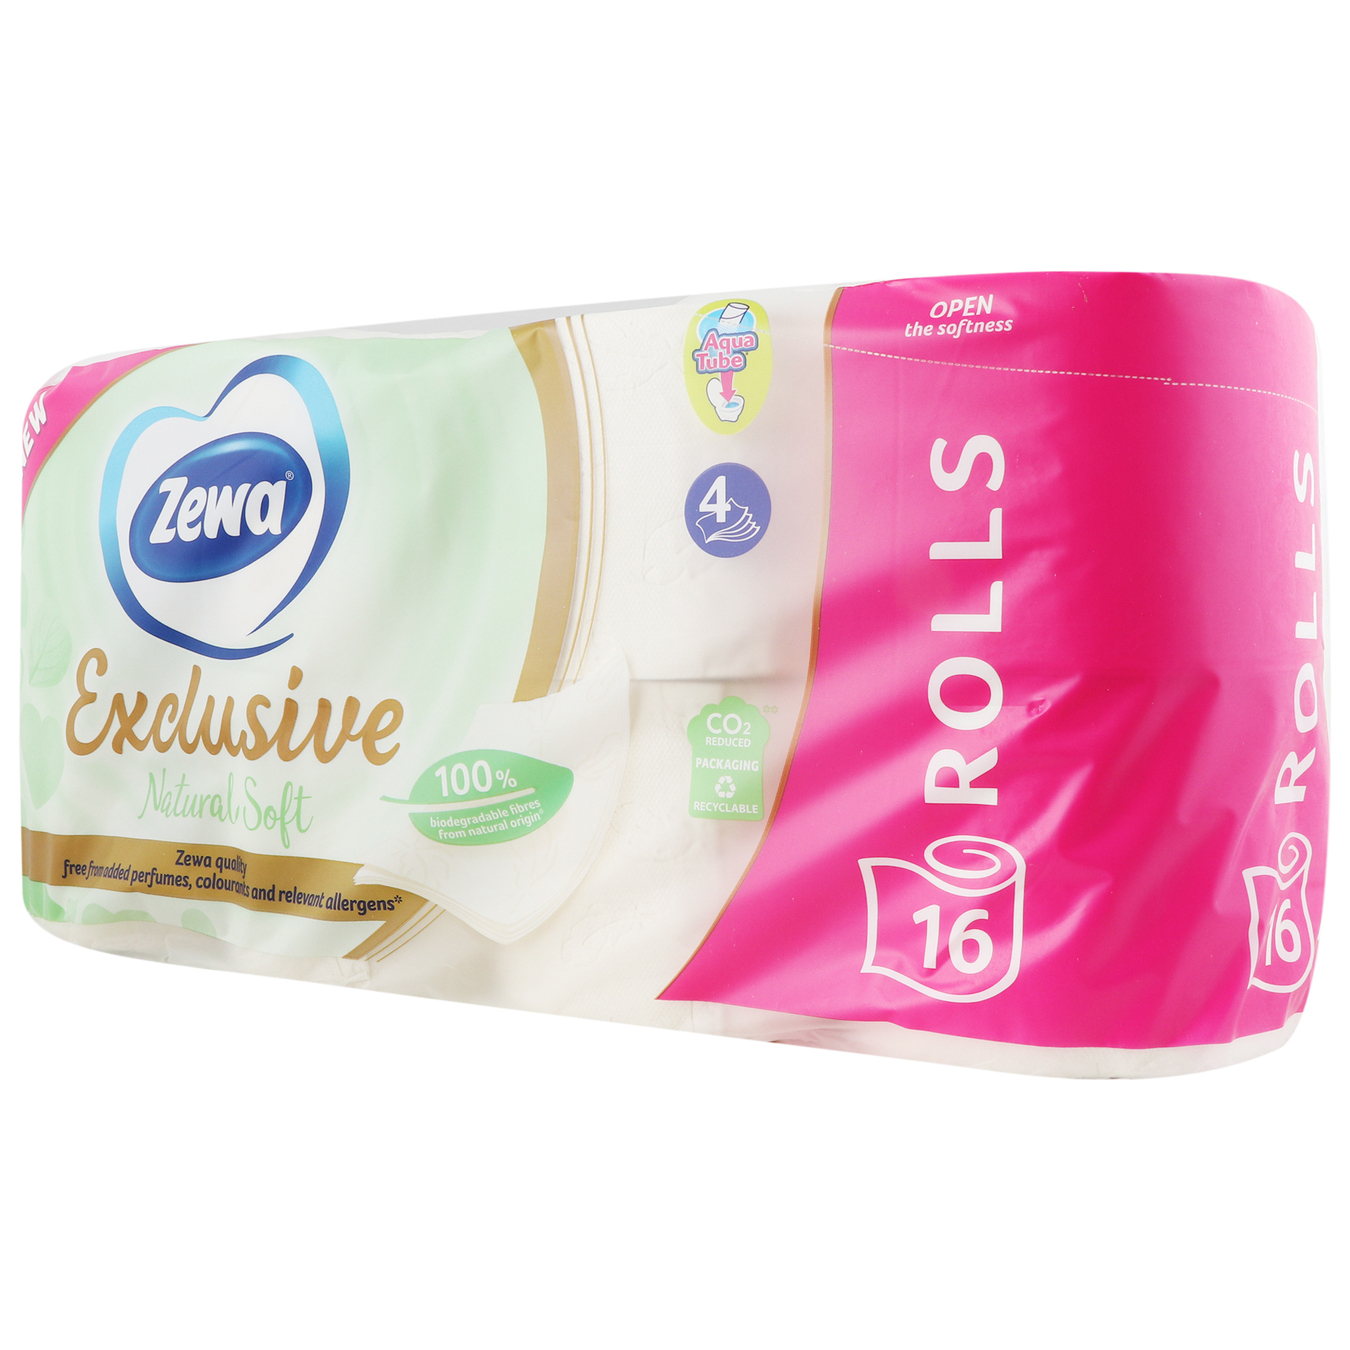 Zewa Exclusive Natural soft Toilet paper 16psc